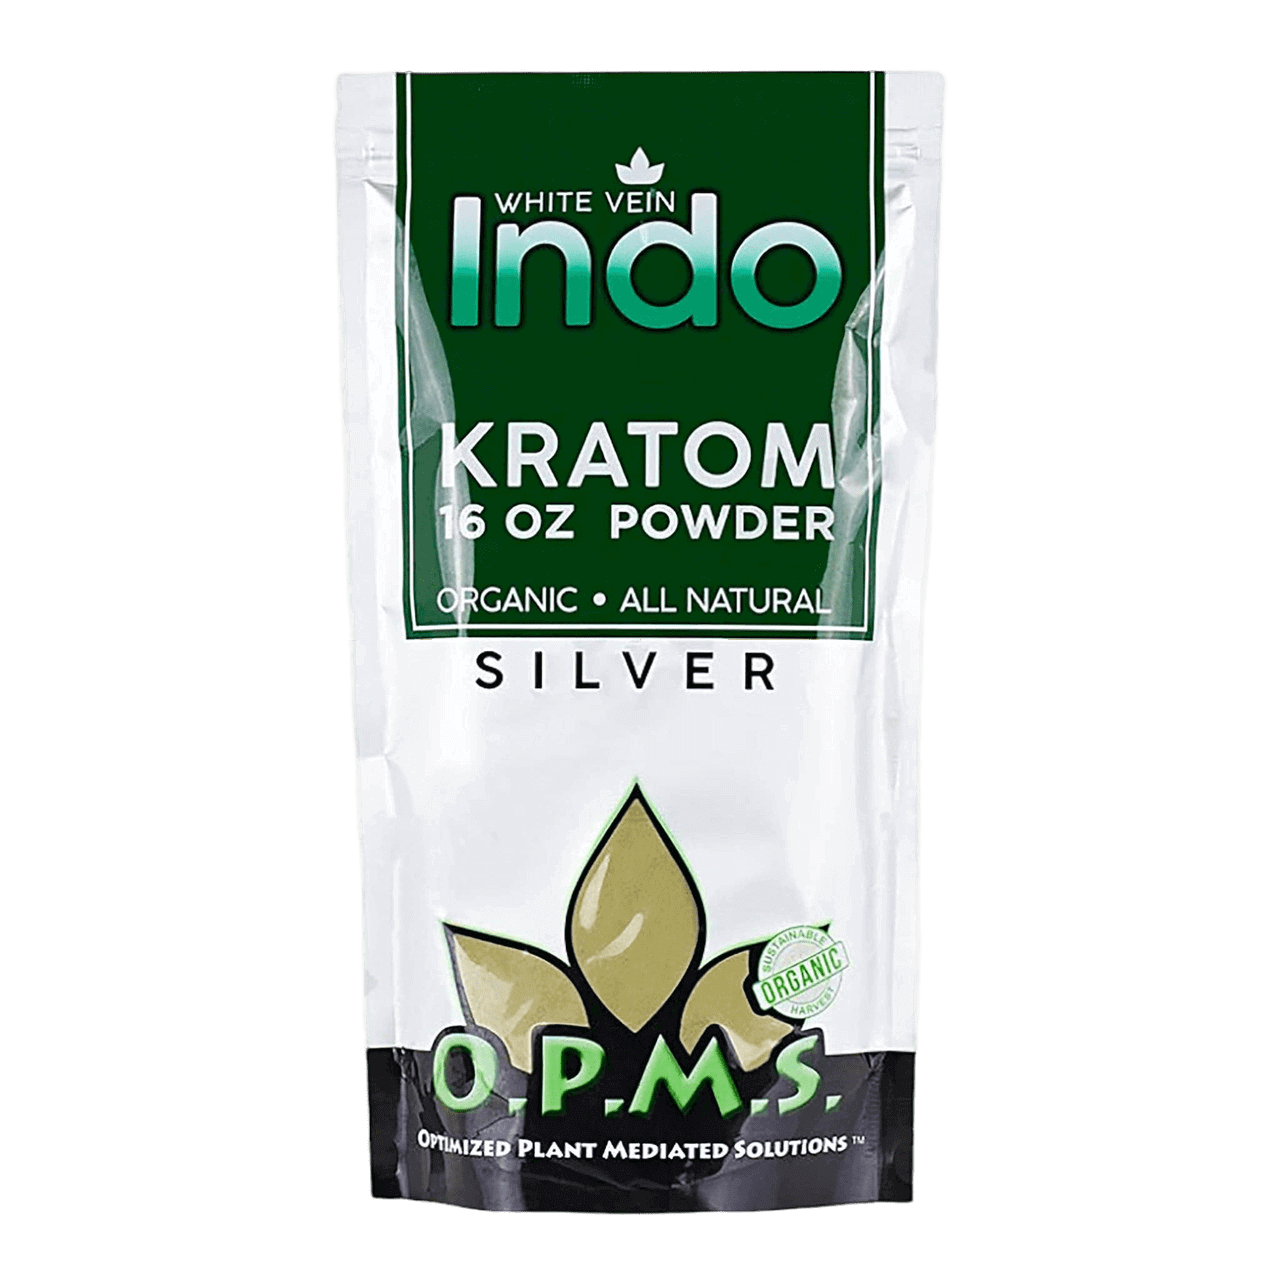 OPMS Silver White Vein Indo Kratom Powder 16 oz